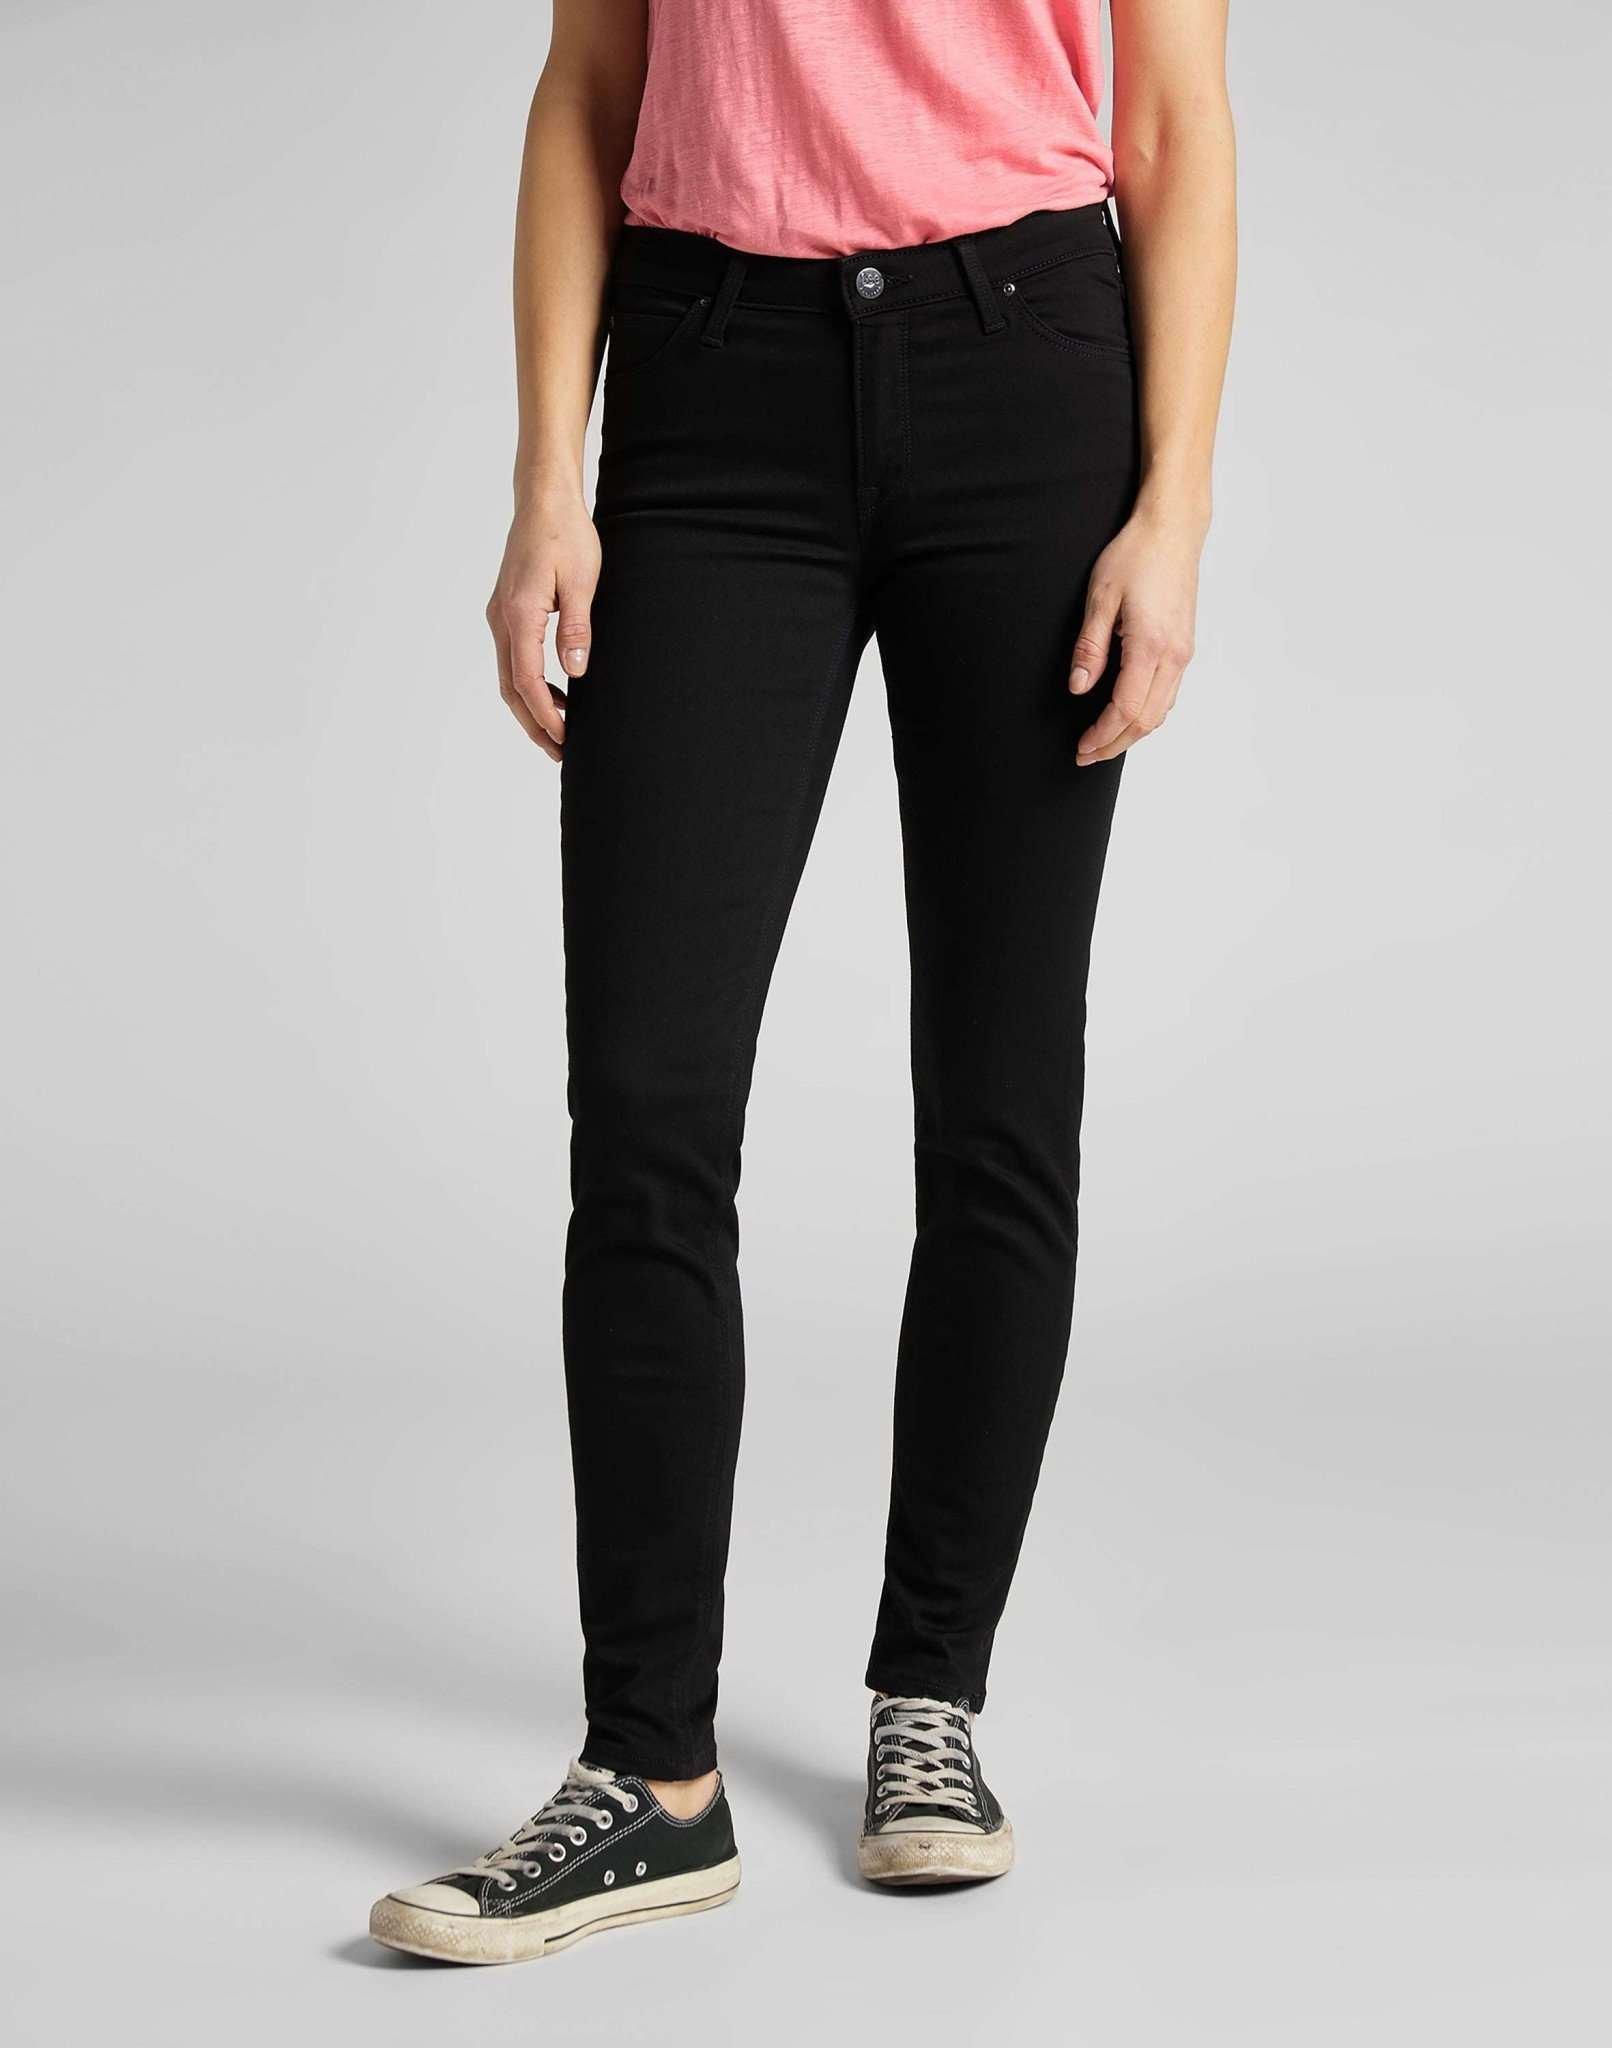 Jeans Skinny Fit Scarlett Damen Schwarz L33/W30 von Lee